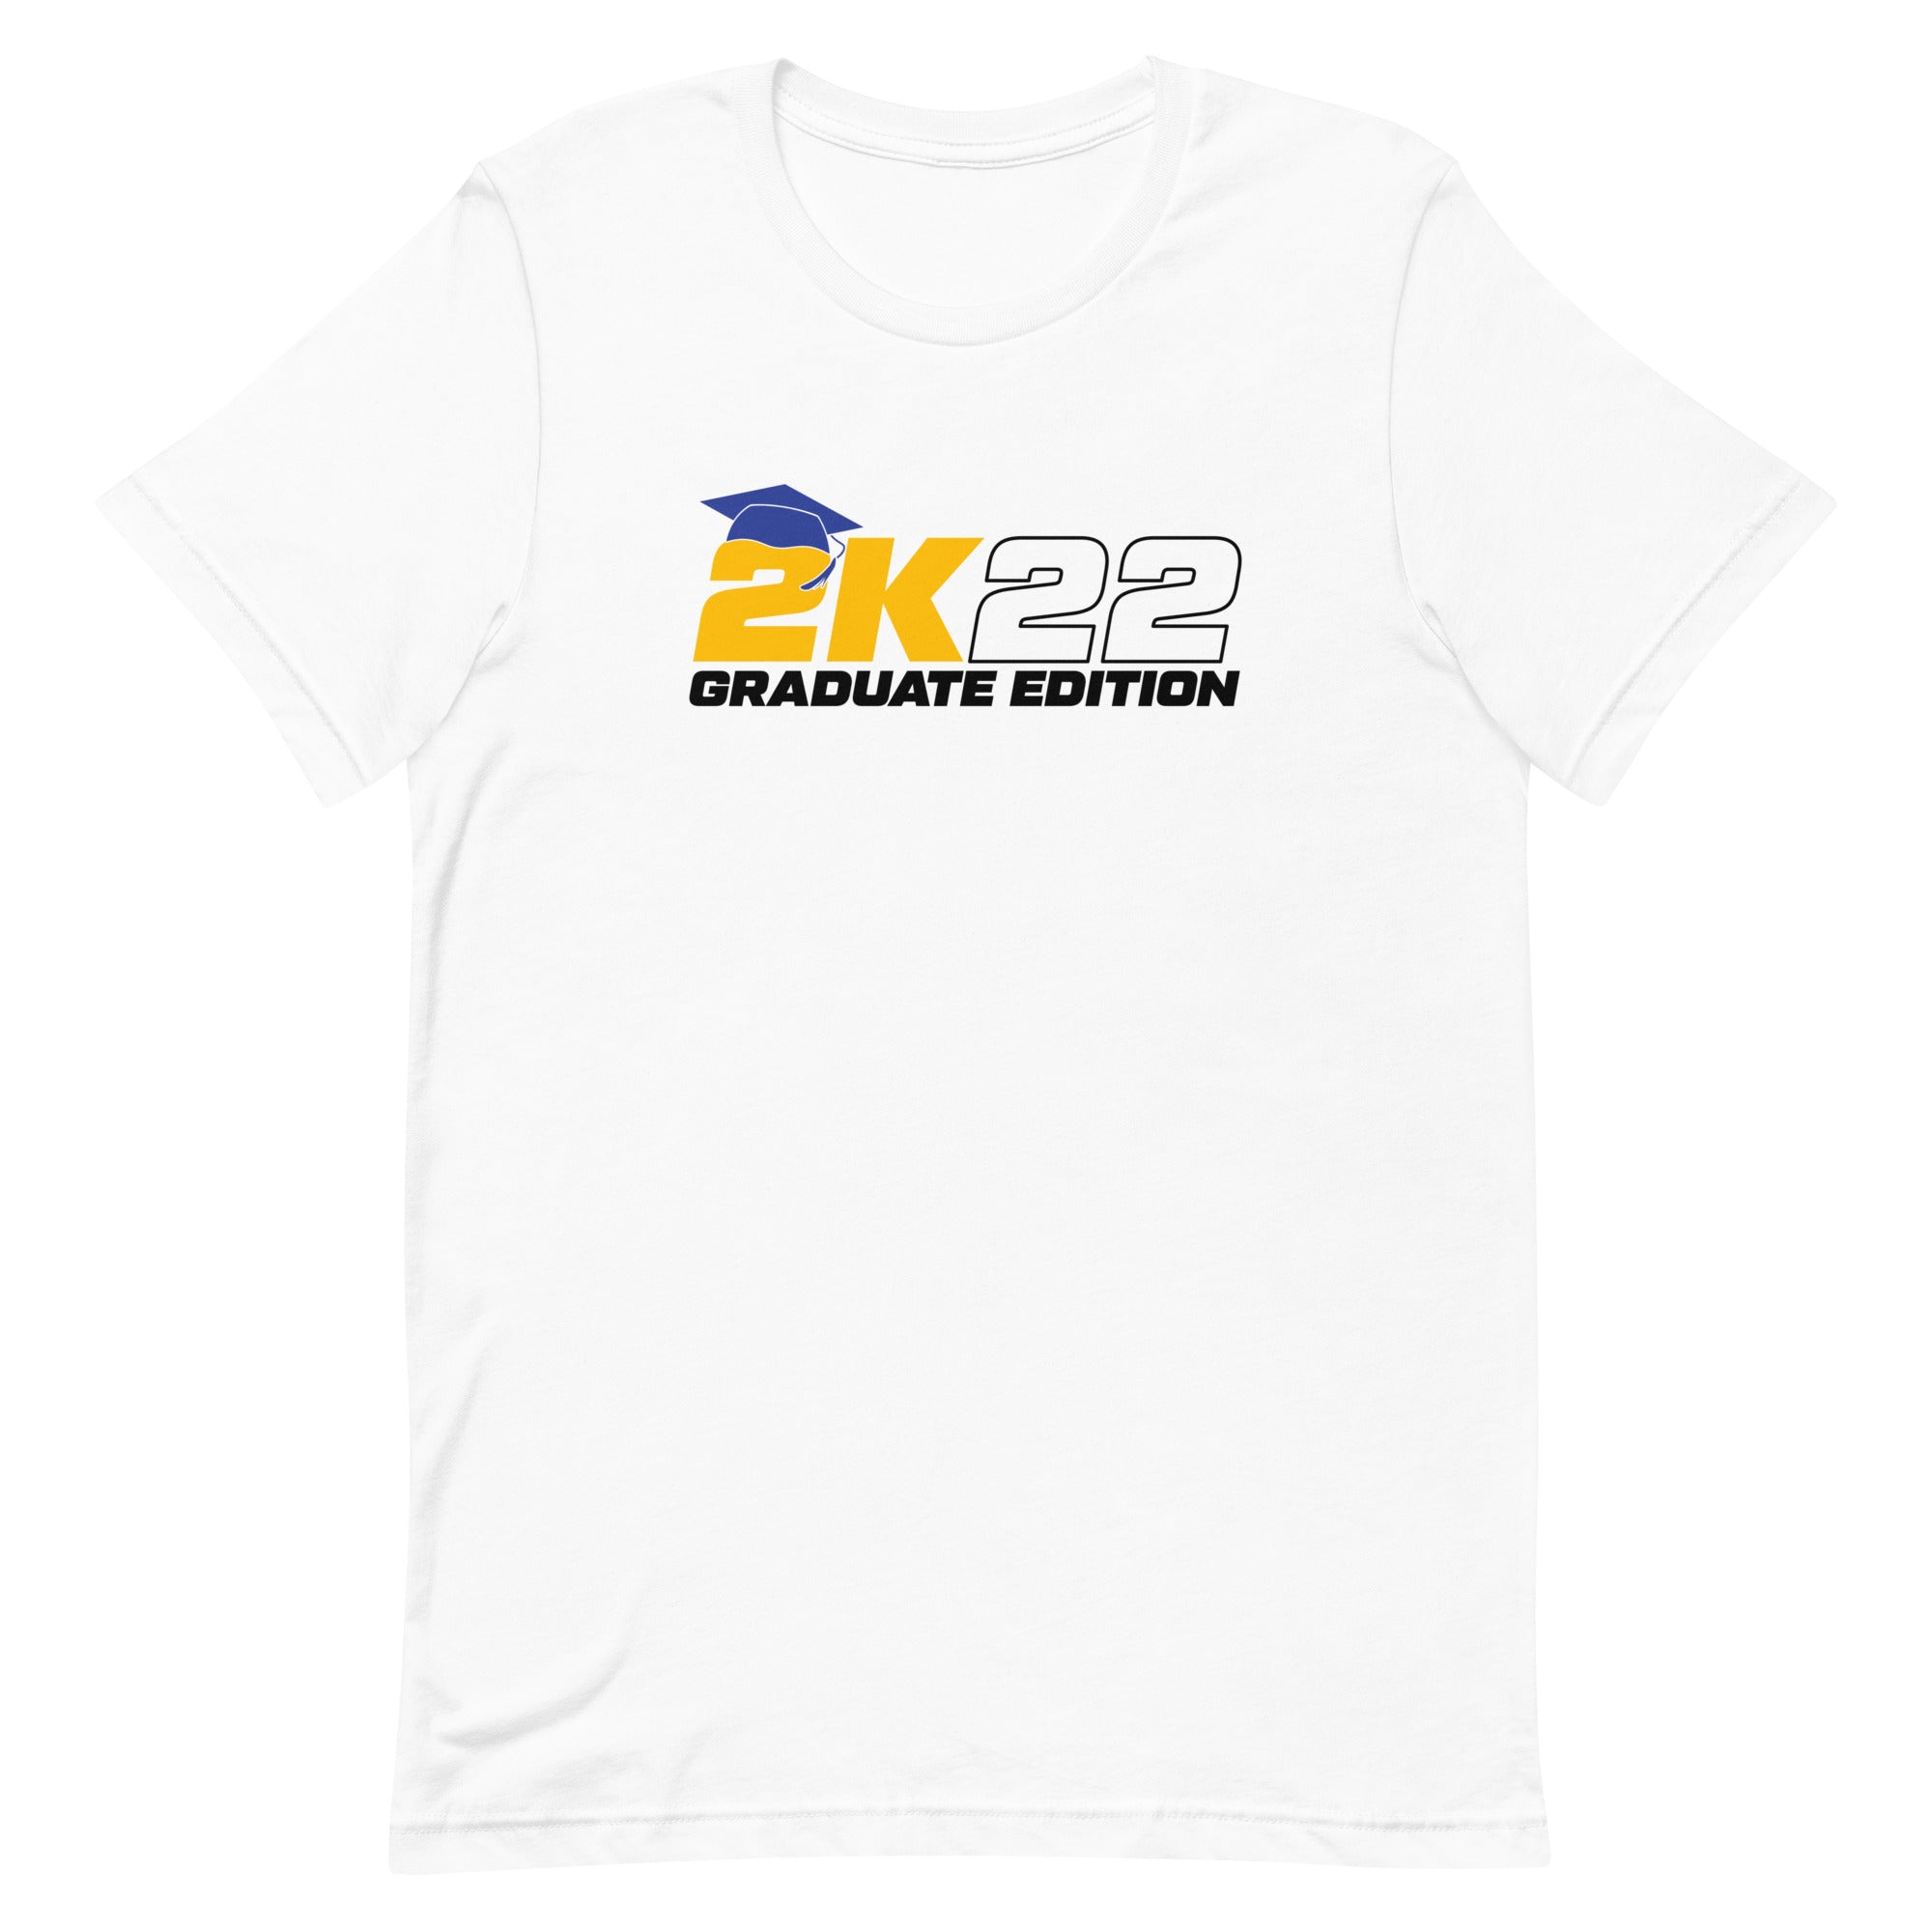 "2K22" Unisex t-shirt (blk)